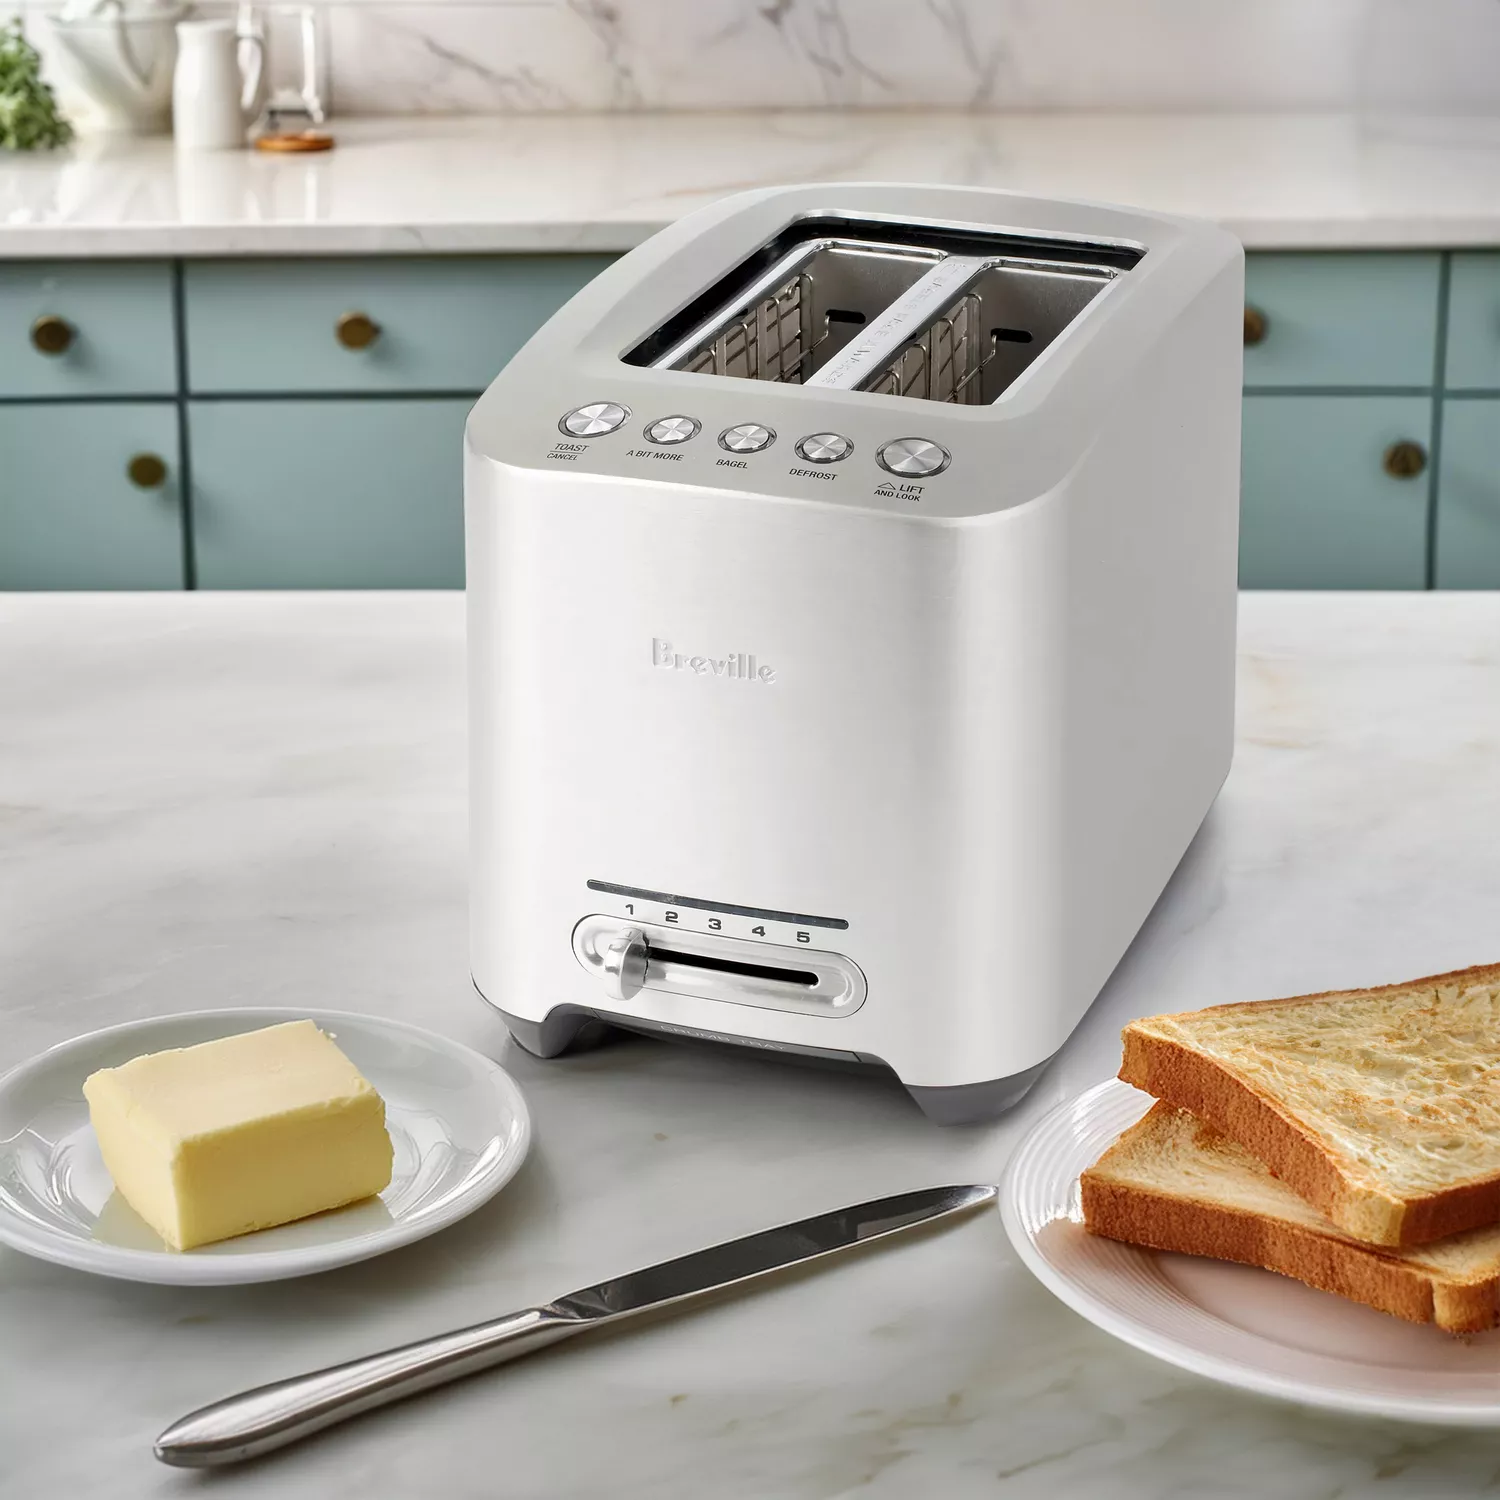 Breville Die-Cast Toaster, 2-Slice